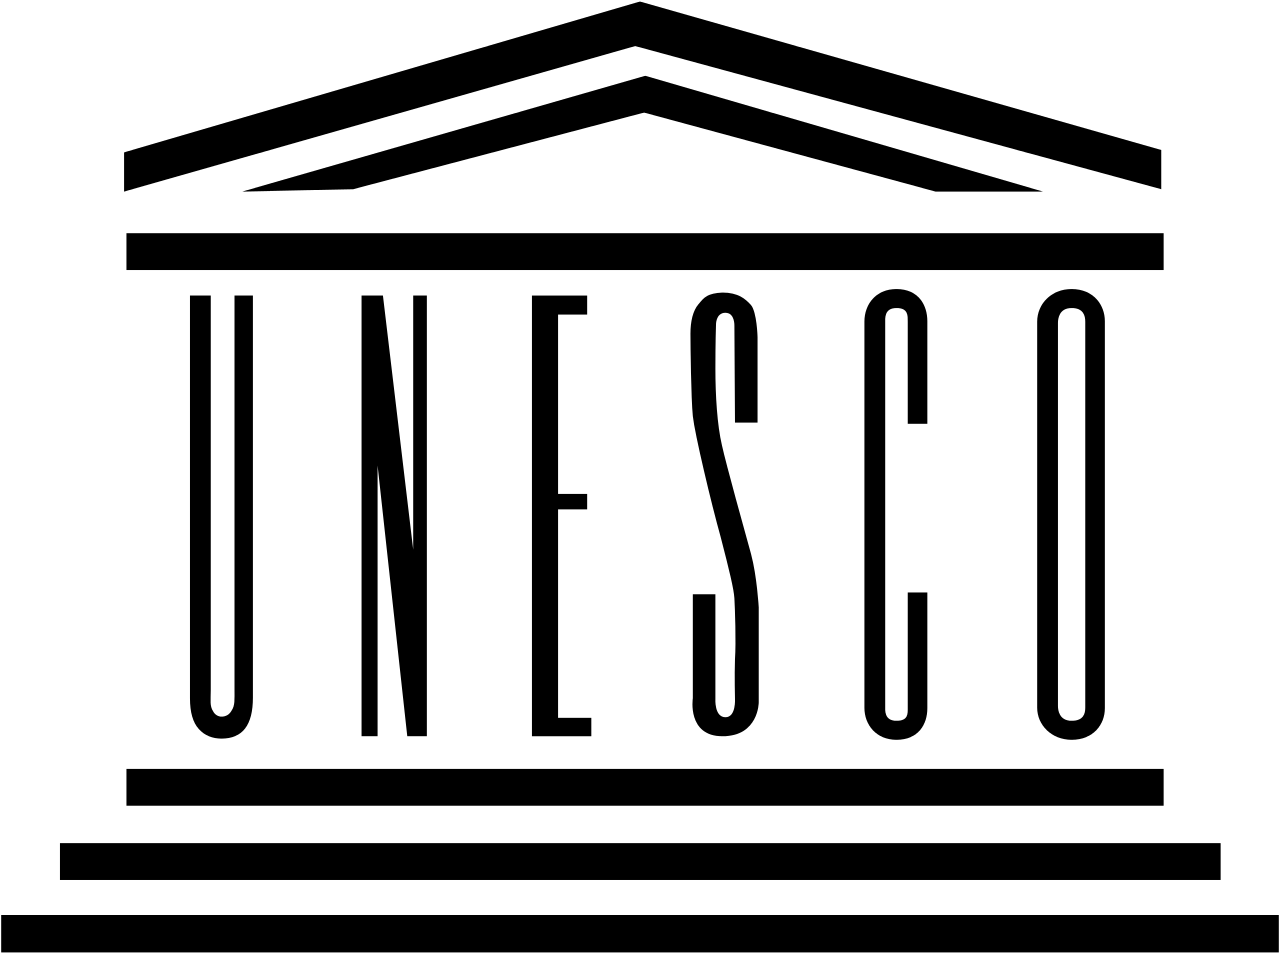 UNESCO Logo - File:UNESCO logo.svg - Wikimedia Commons